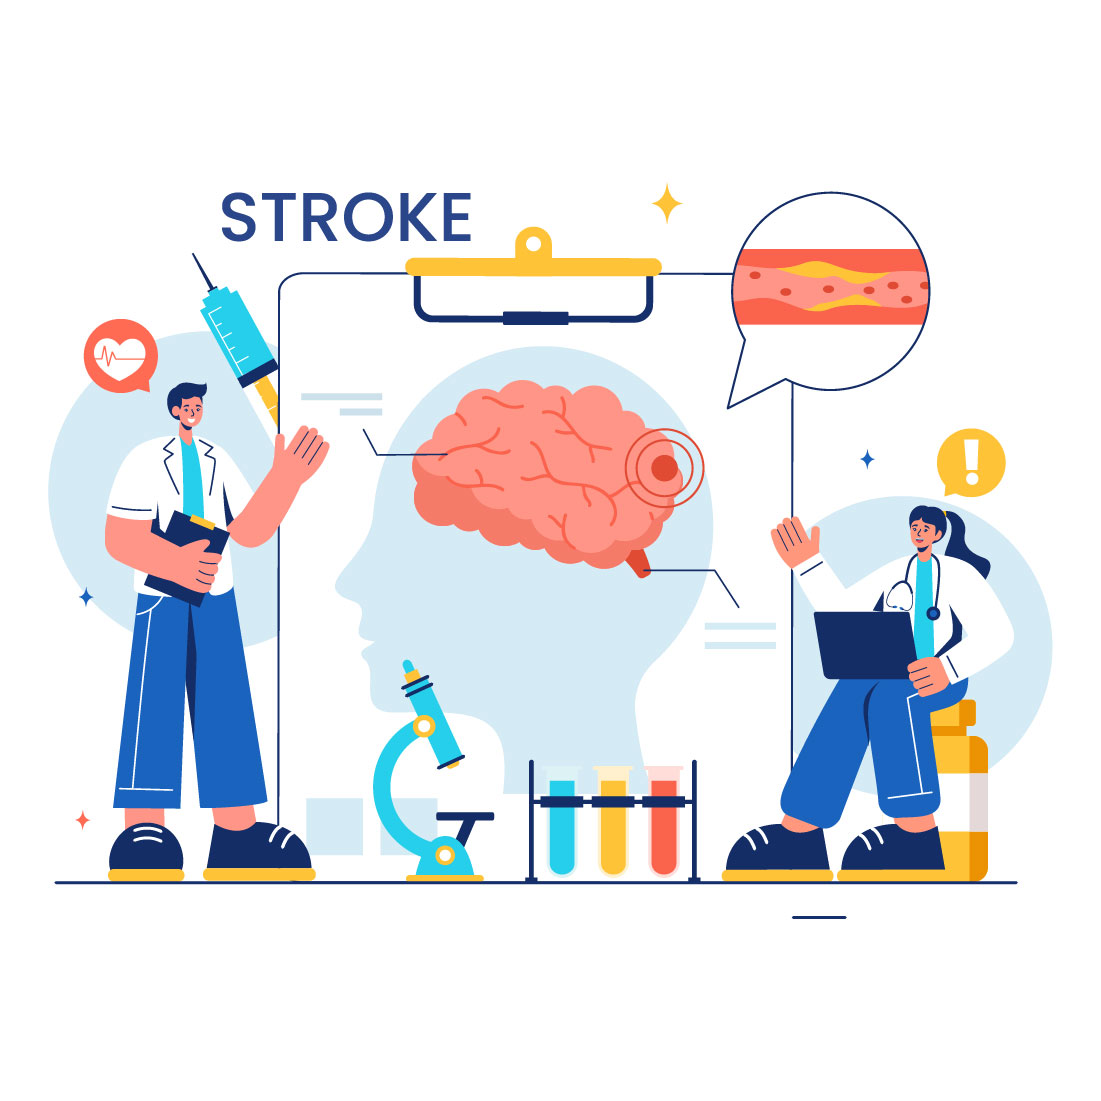 12 Human Brain Stroke Illustration cover image.